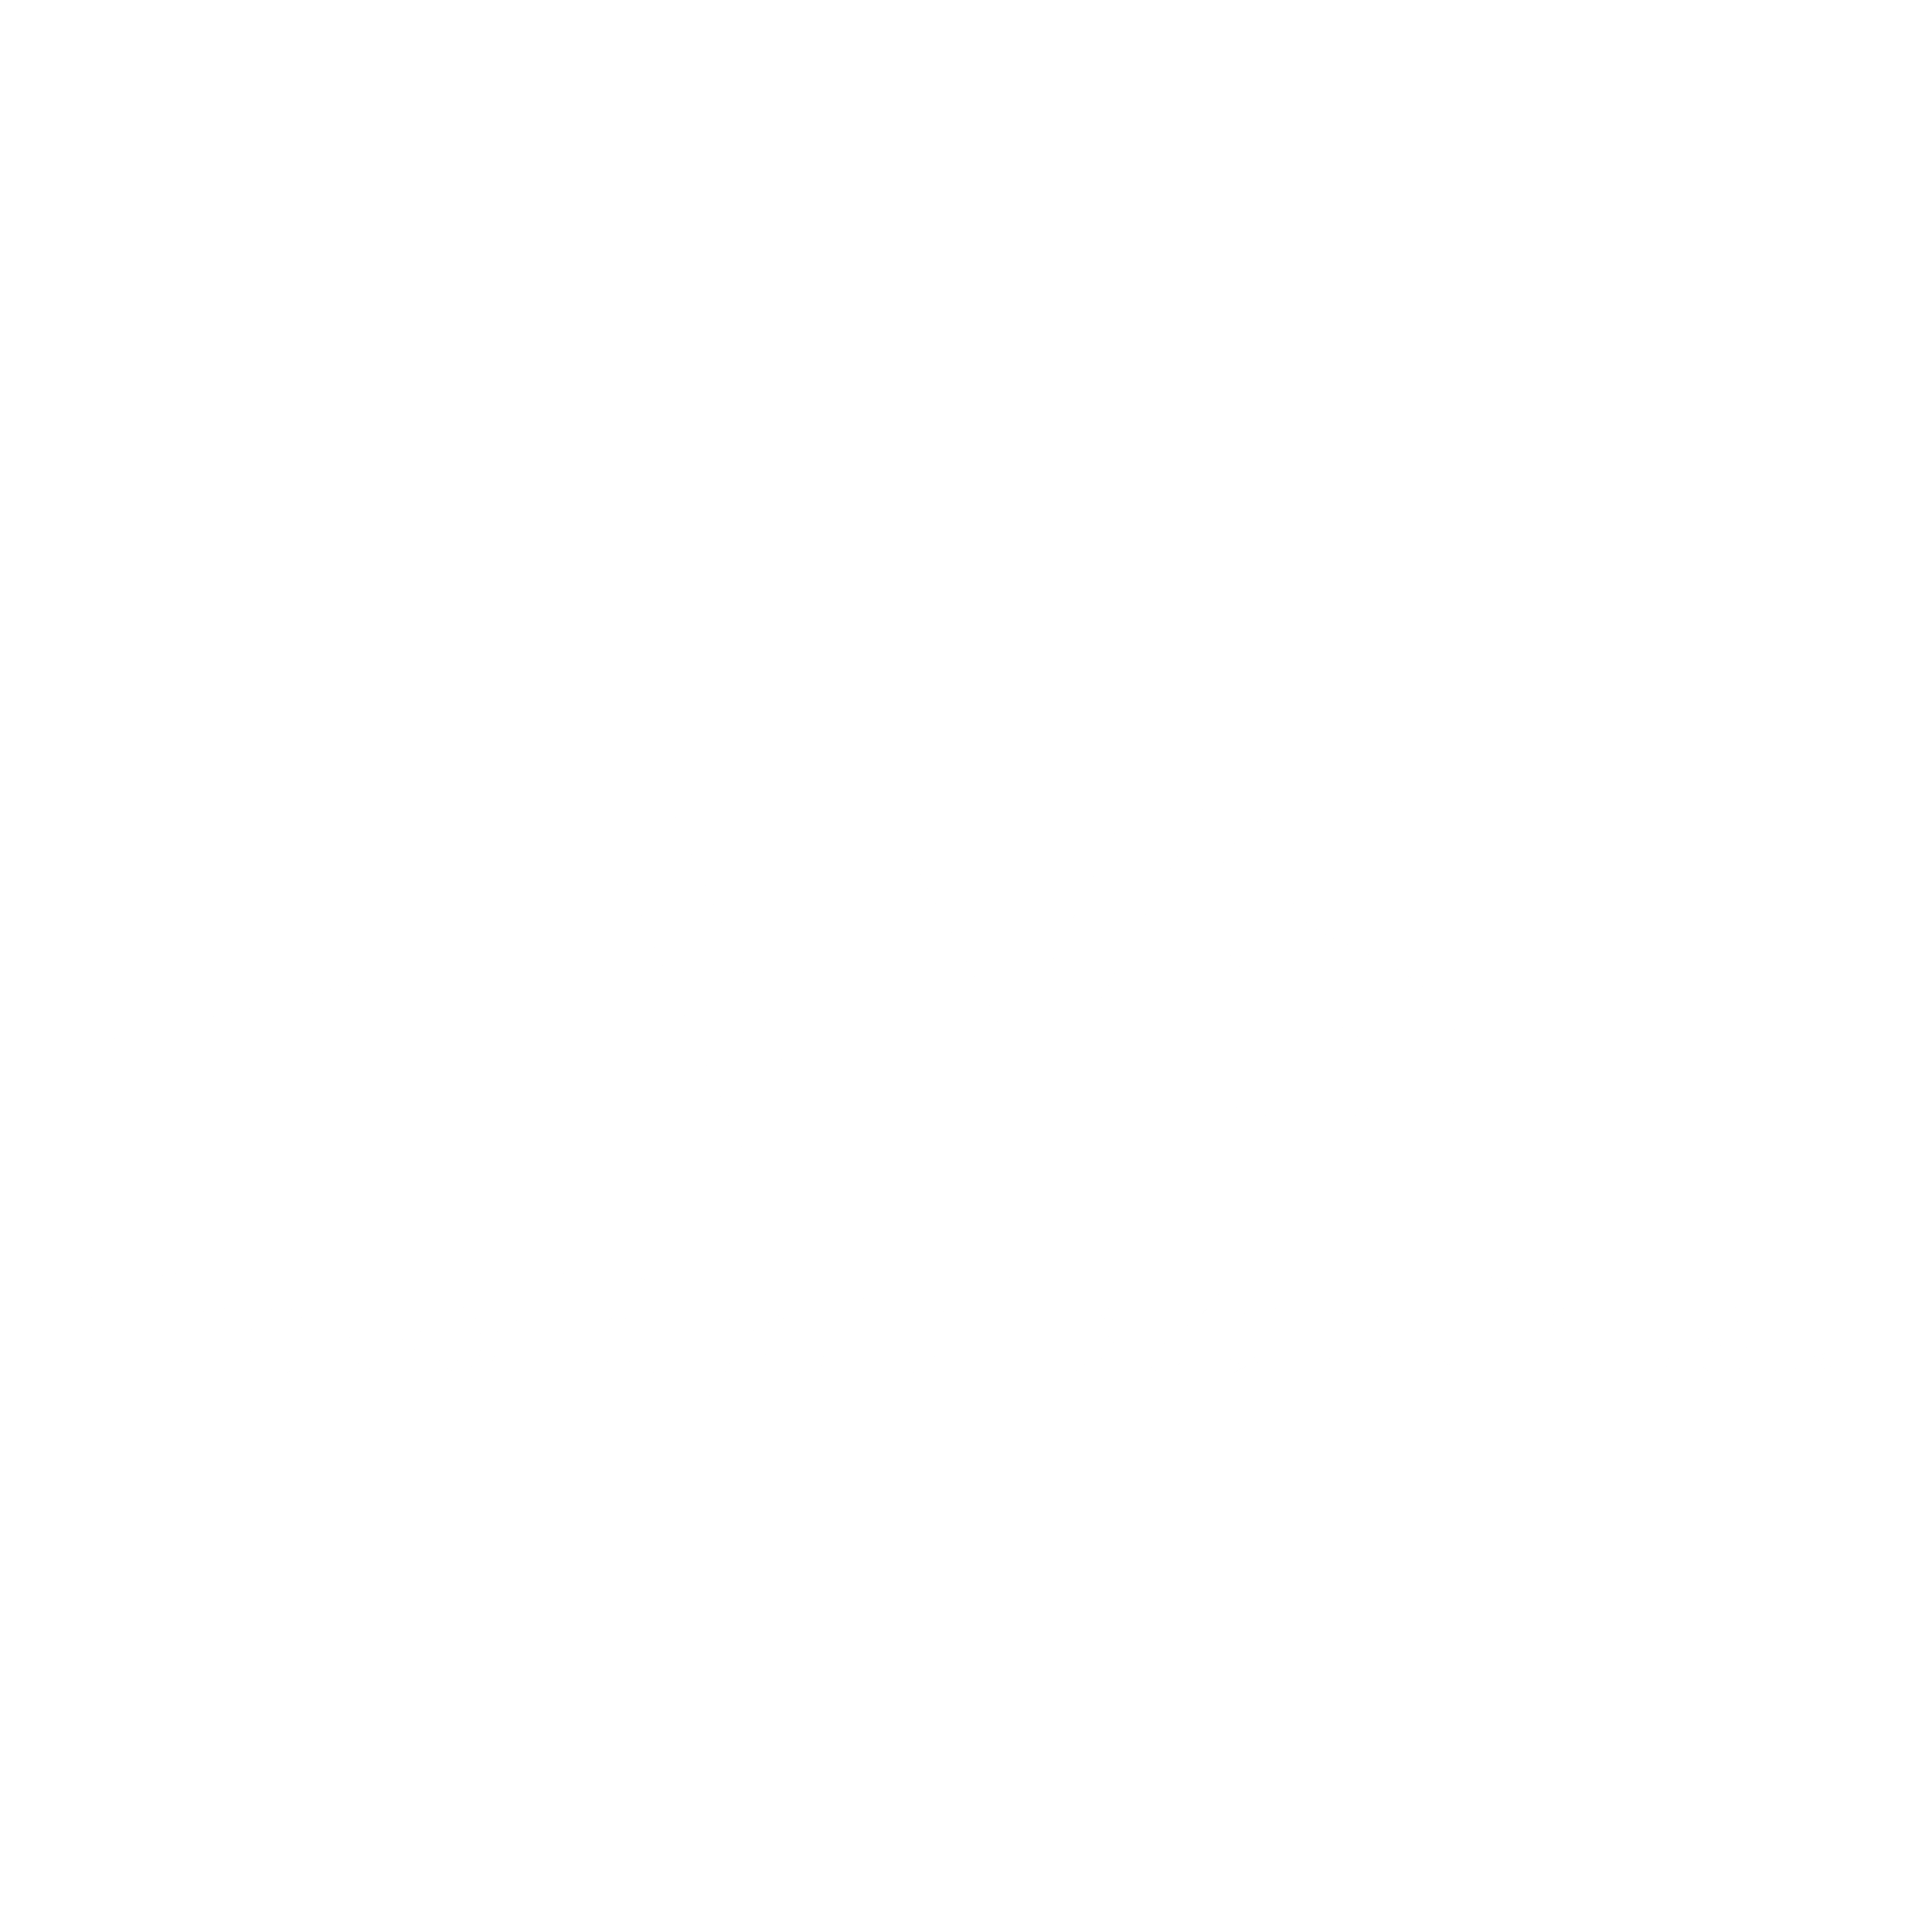 NYSE Logo - NYSE Logo PNG Transparent & SVG Vector - Freebie Supply